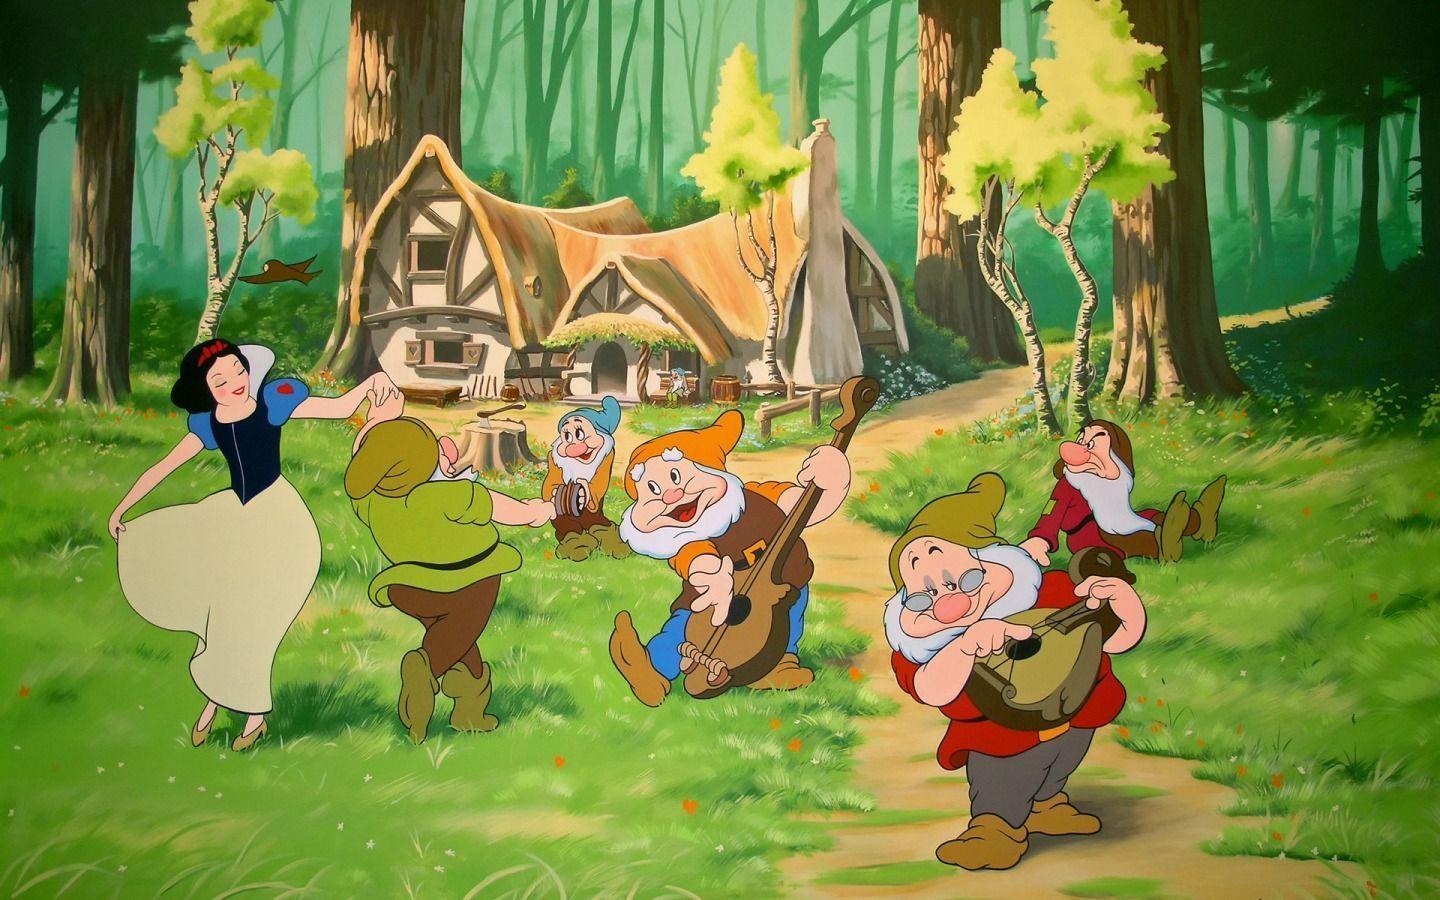 白雪公主和七个小矮人(Snow White and the Seven Dwarfs)-电影-腾讯视频